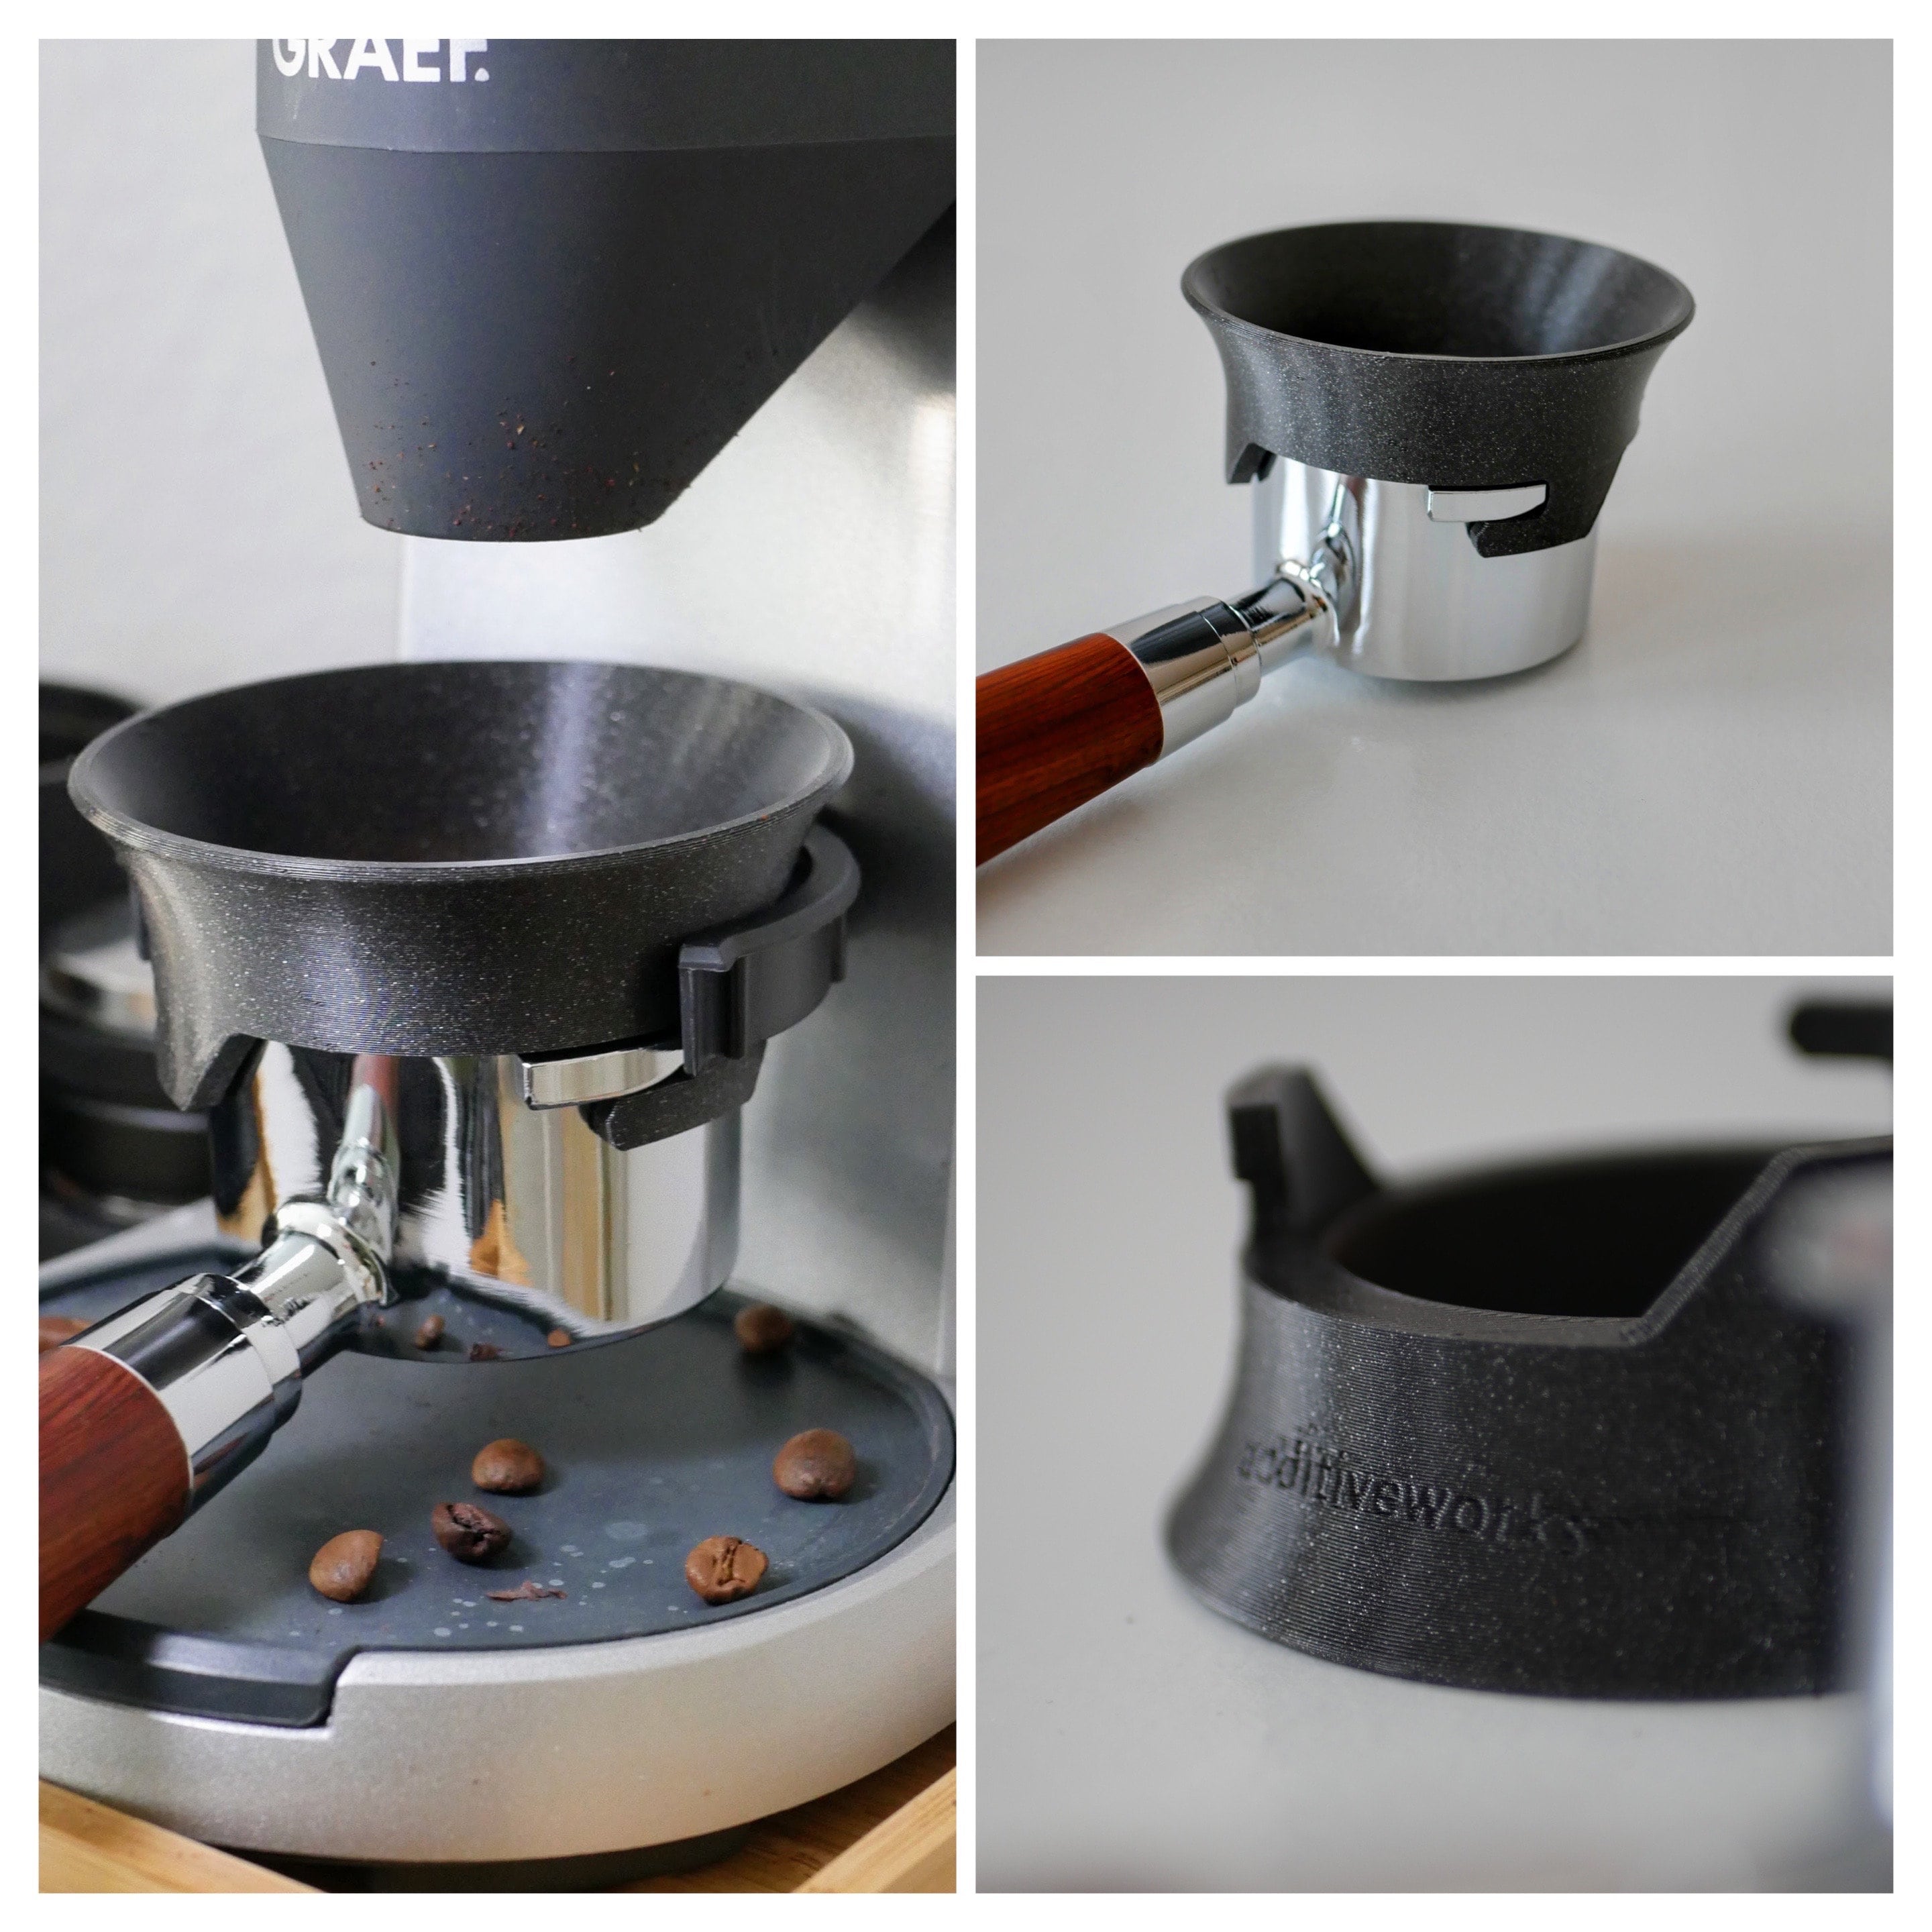 Kaffee-Dosiertrichter für Siebträger 51mm, Delonghi Dedica,  Siebträgerzubehör, Portafilter, Espresso, Dosing, WDT - .de